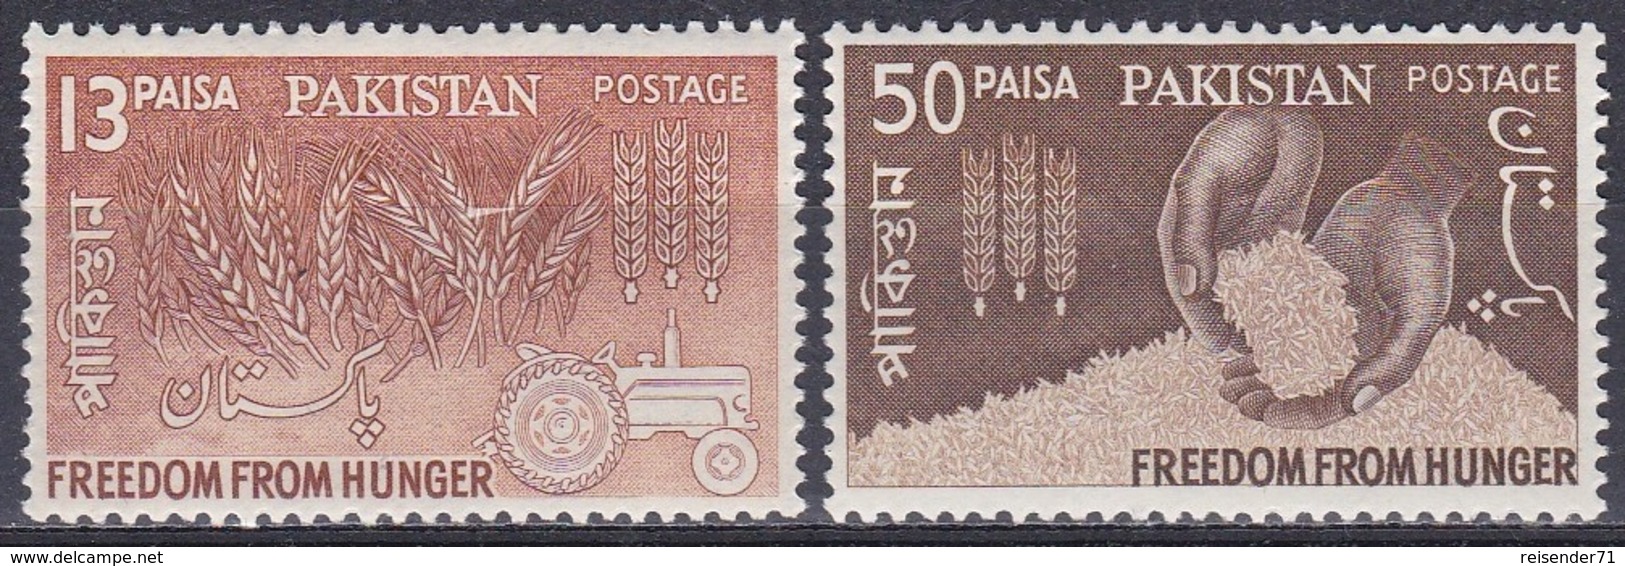 Pakistan 1963 Organisationen UNO ONU FAO Hunger Ernährung Food Getreide Crops Reis Rice Traktor, Mi. 190-1 ** - Pakistan